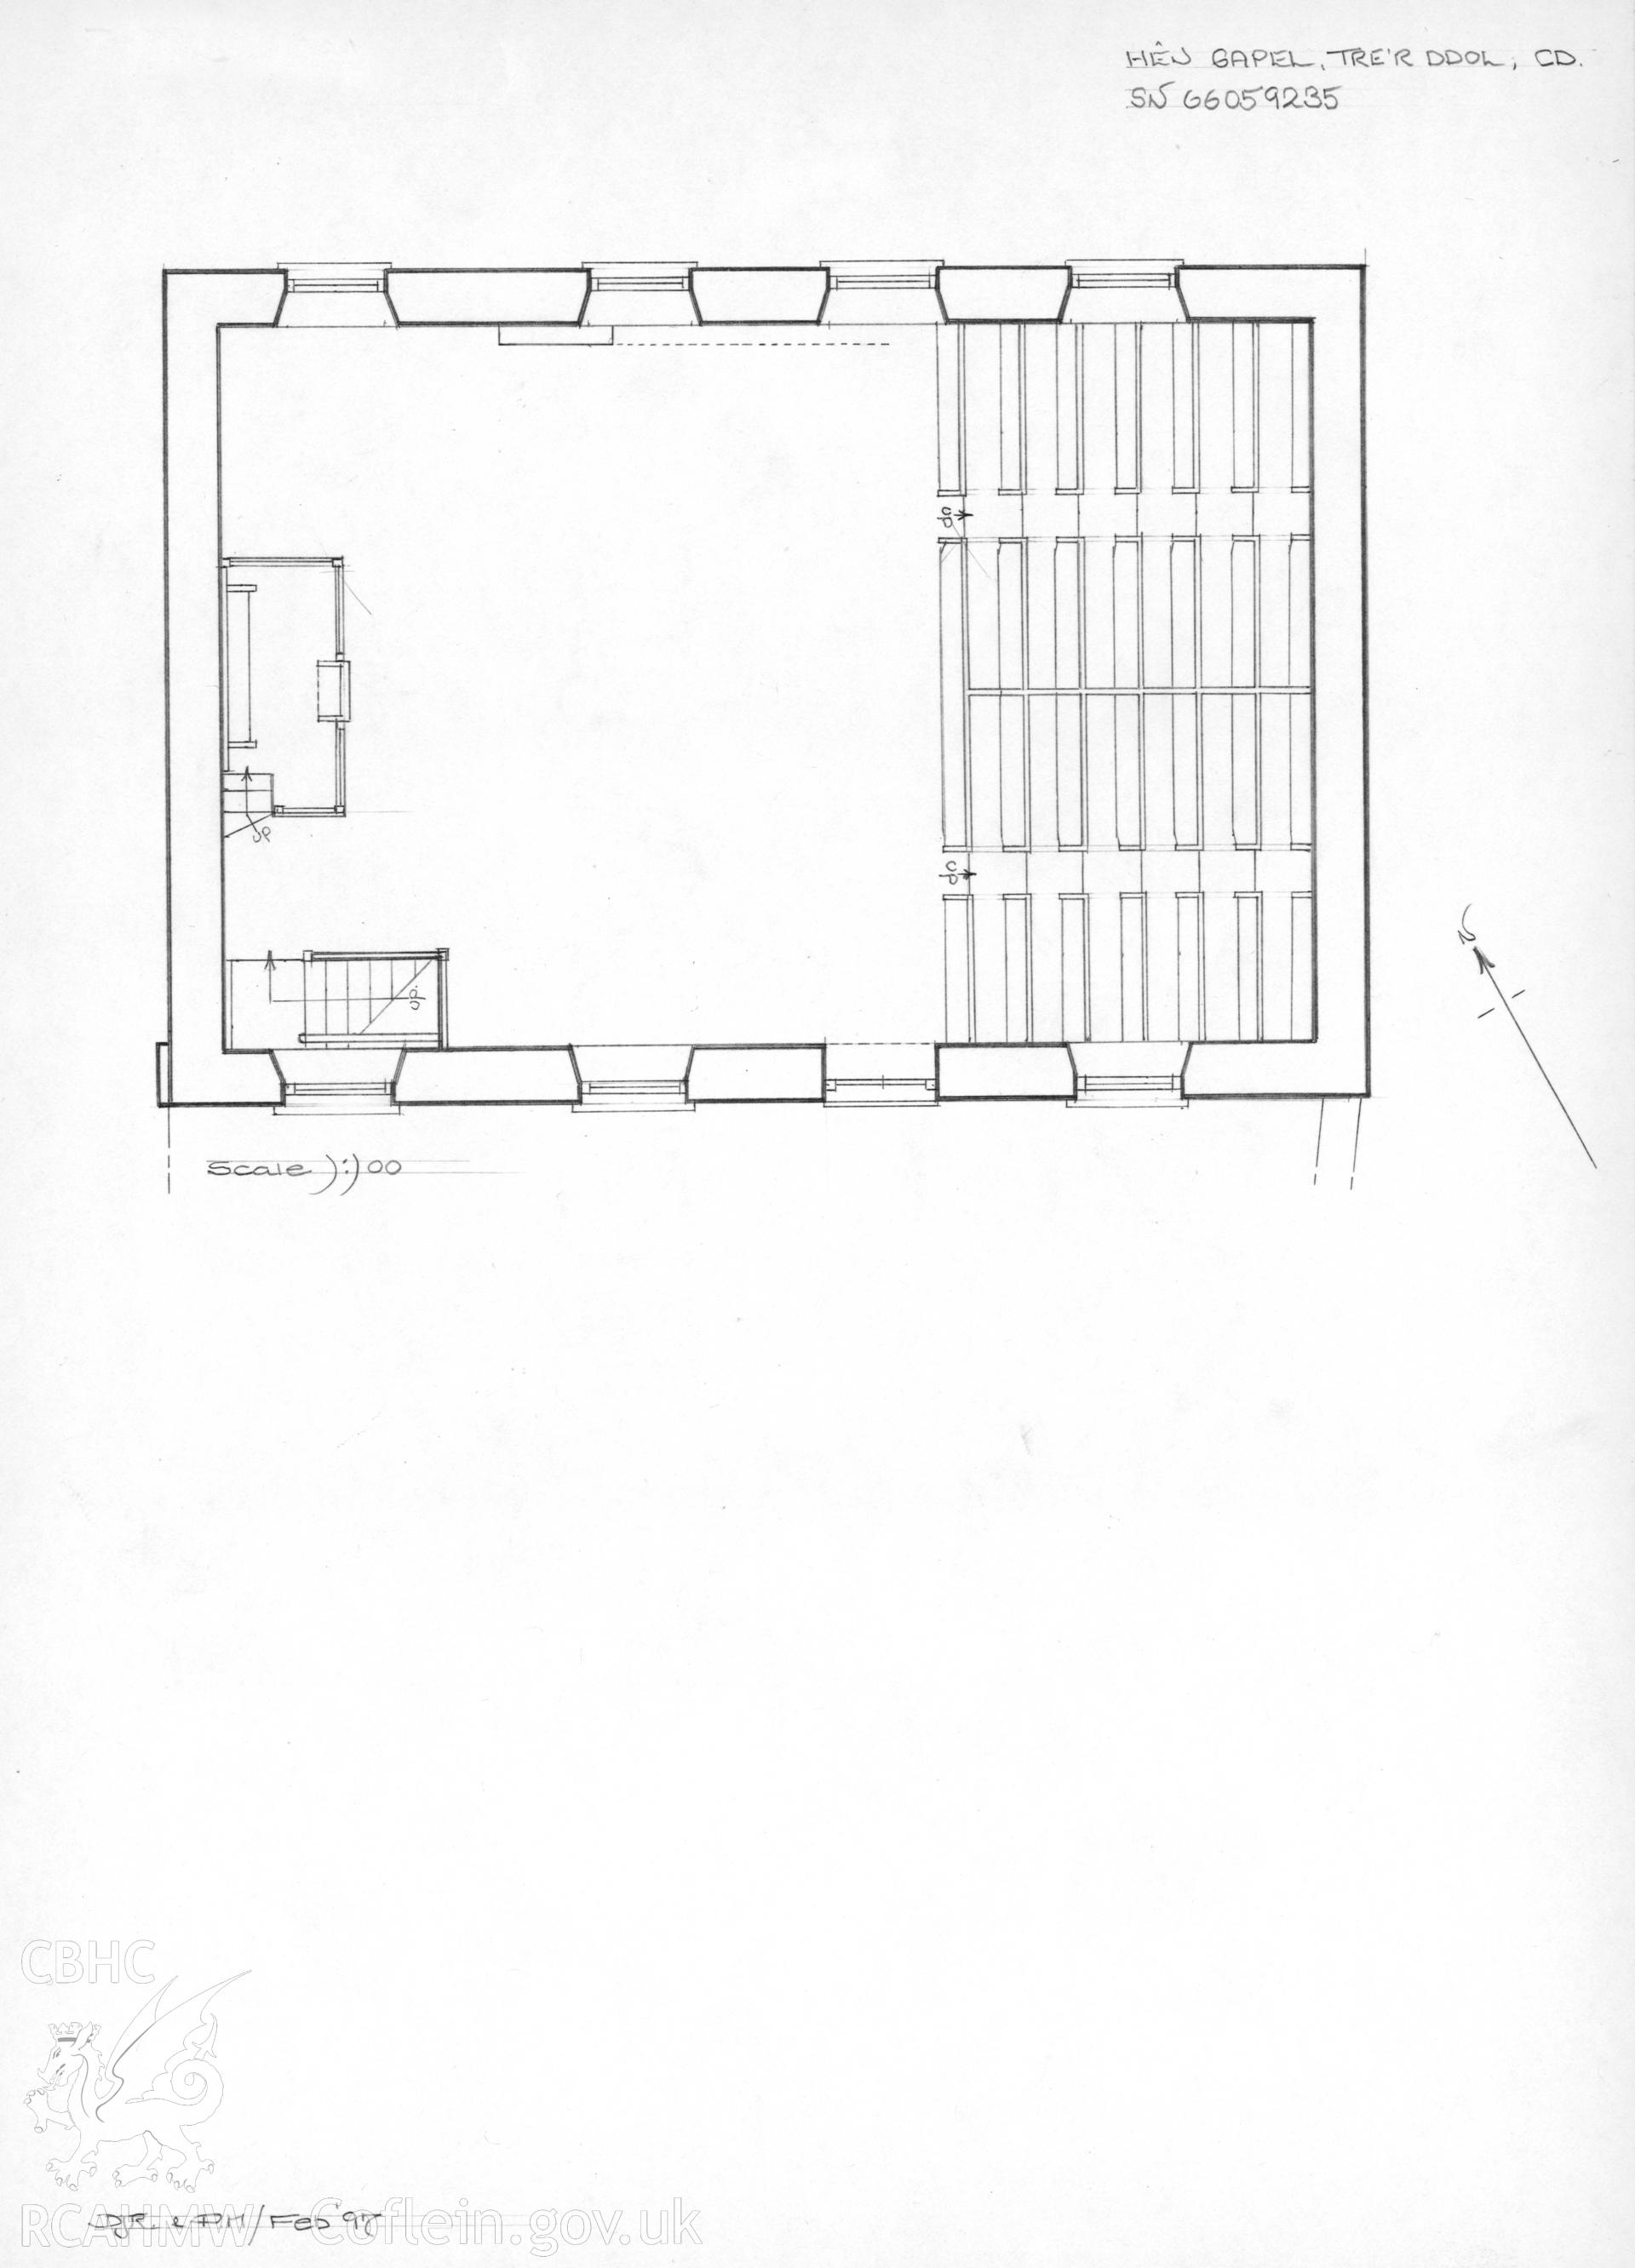 Soar Wesleyan Methodist Chapel (Yr Hen Gapel), Llangynfelin; Pencil drawing showing plan of building, by Dylan Roberts & Patricia Moore dated February 1997.